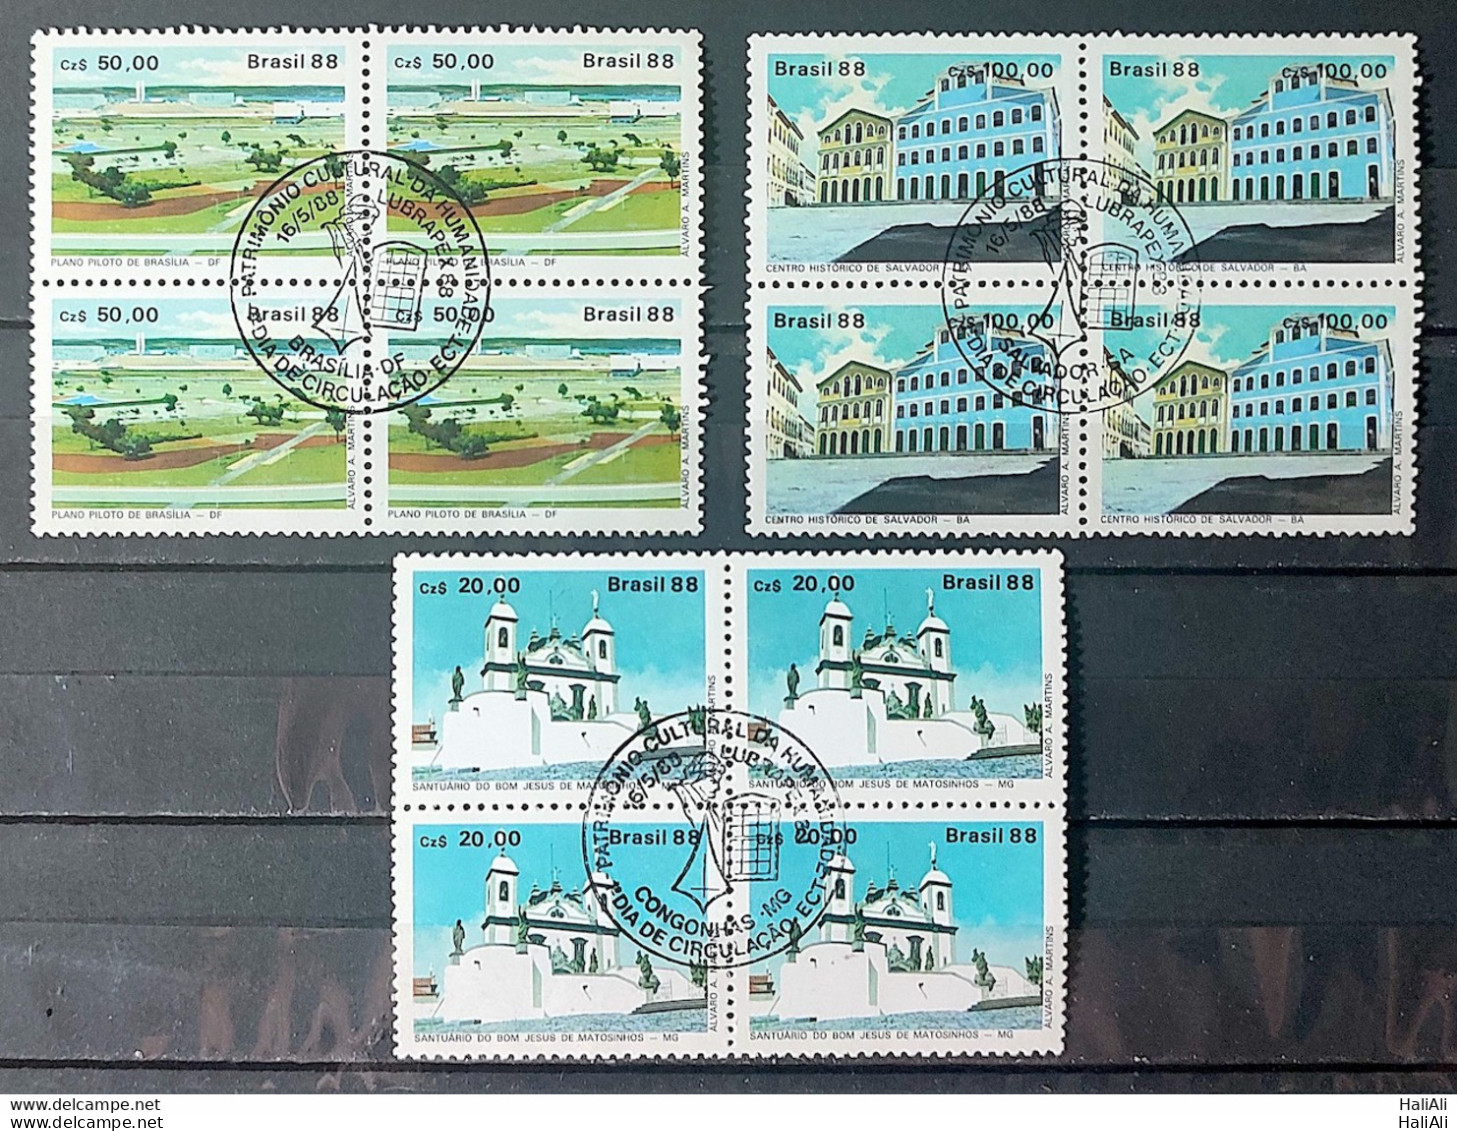 C 1585 Brazil Stamp Lubrapex Portugal Jorge Amado Brasilia 1988 Block Of 4 CBC MG DF BA Full Series - Ungebraucht